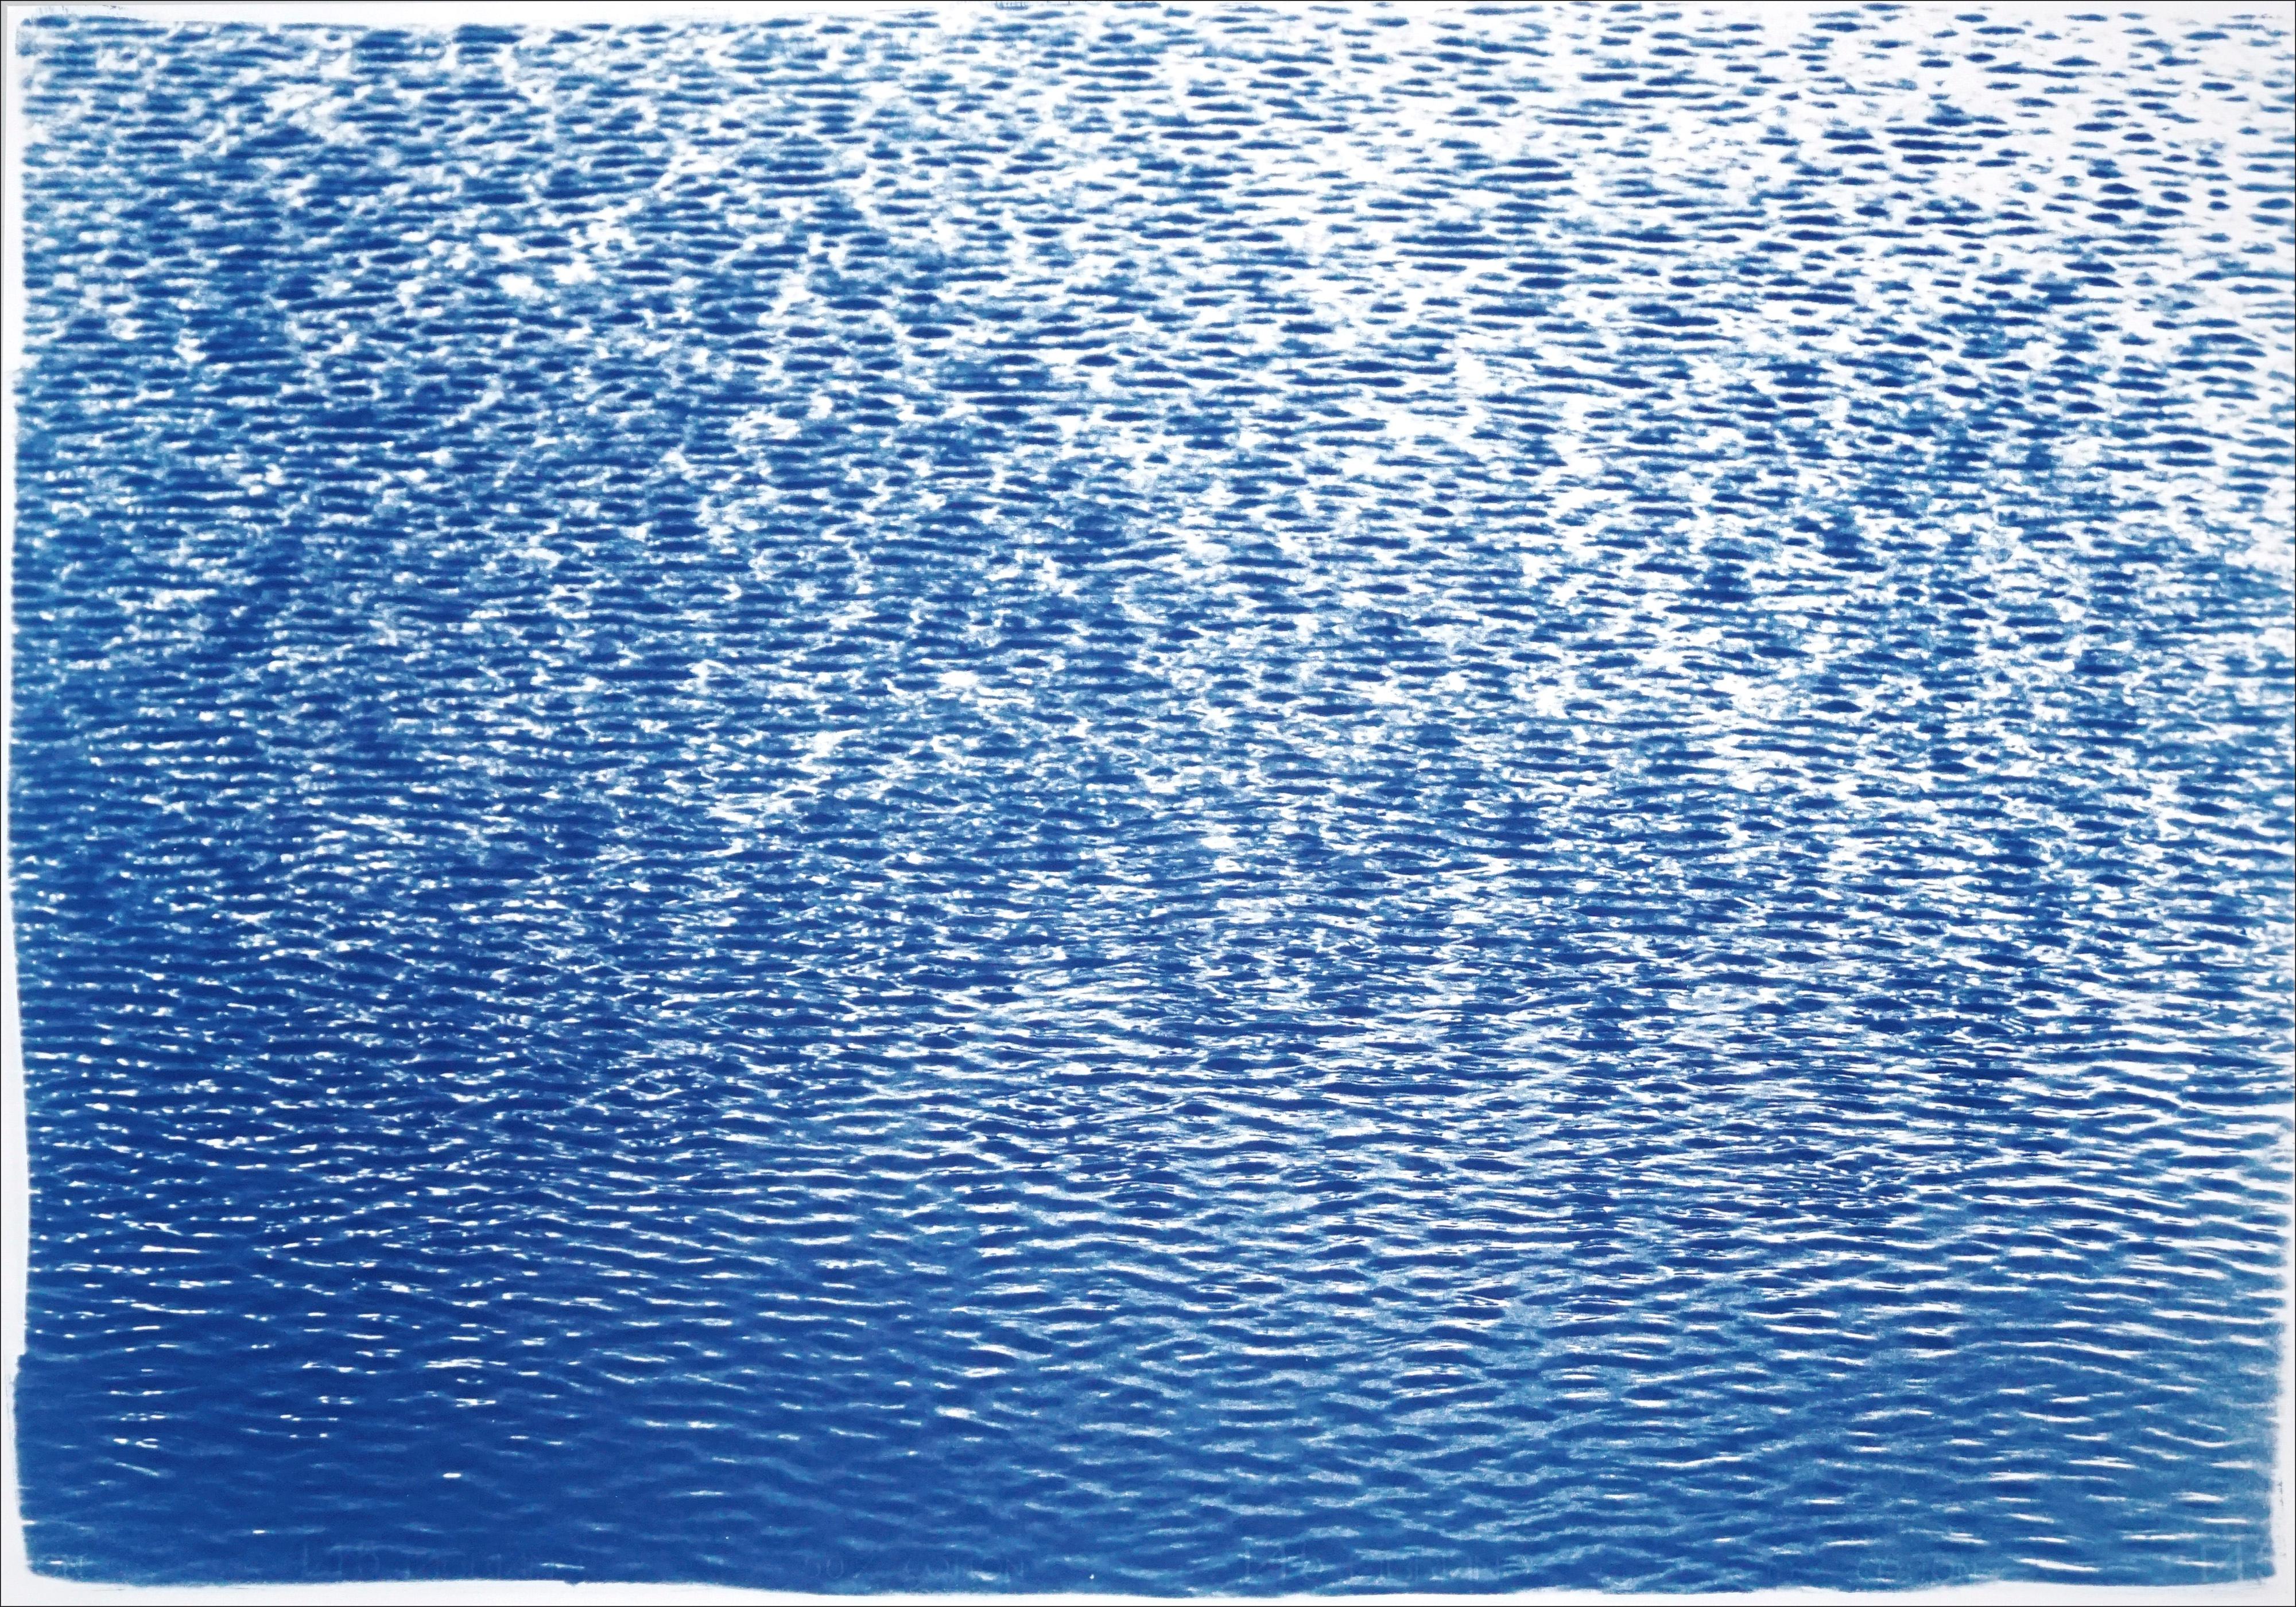 Serene Cove Waters, Feng Shui Seascape, Blue and White Ripples, Horizontal Print